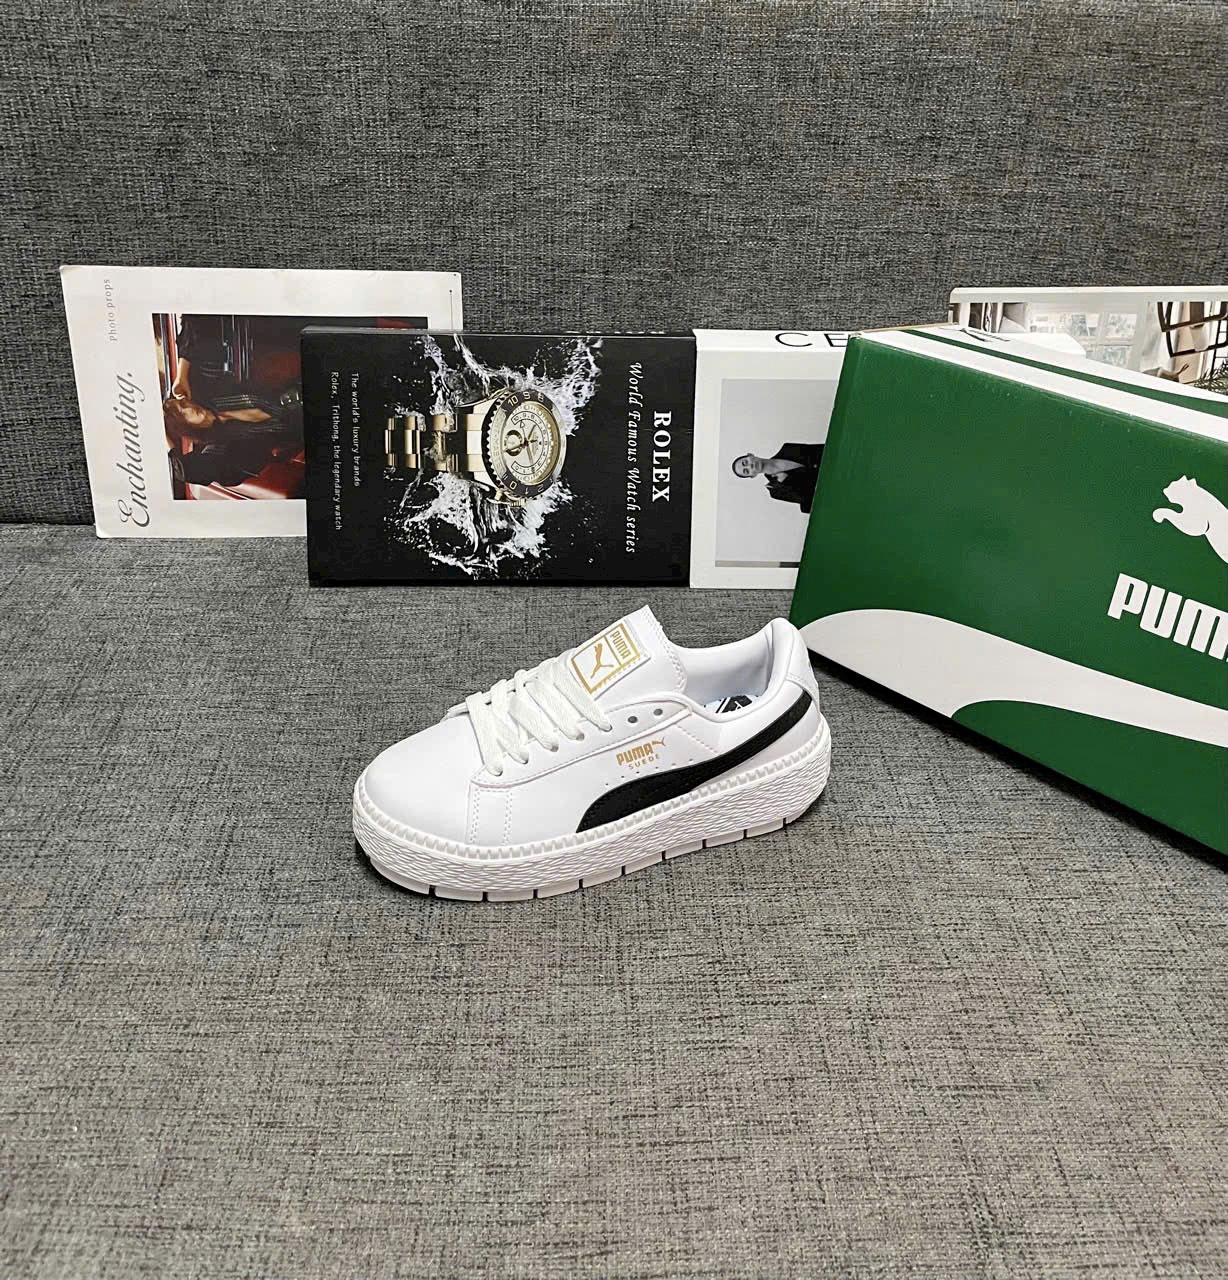 Giày Puma Basket Platform White Black Gold Siêu Cấp